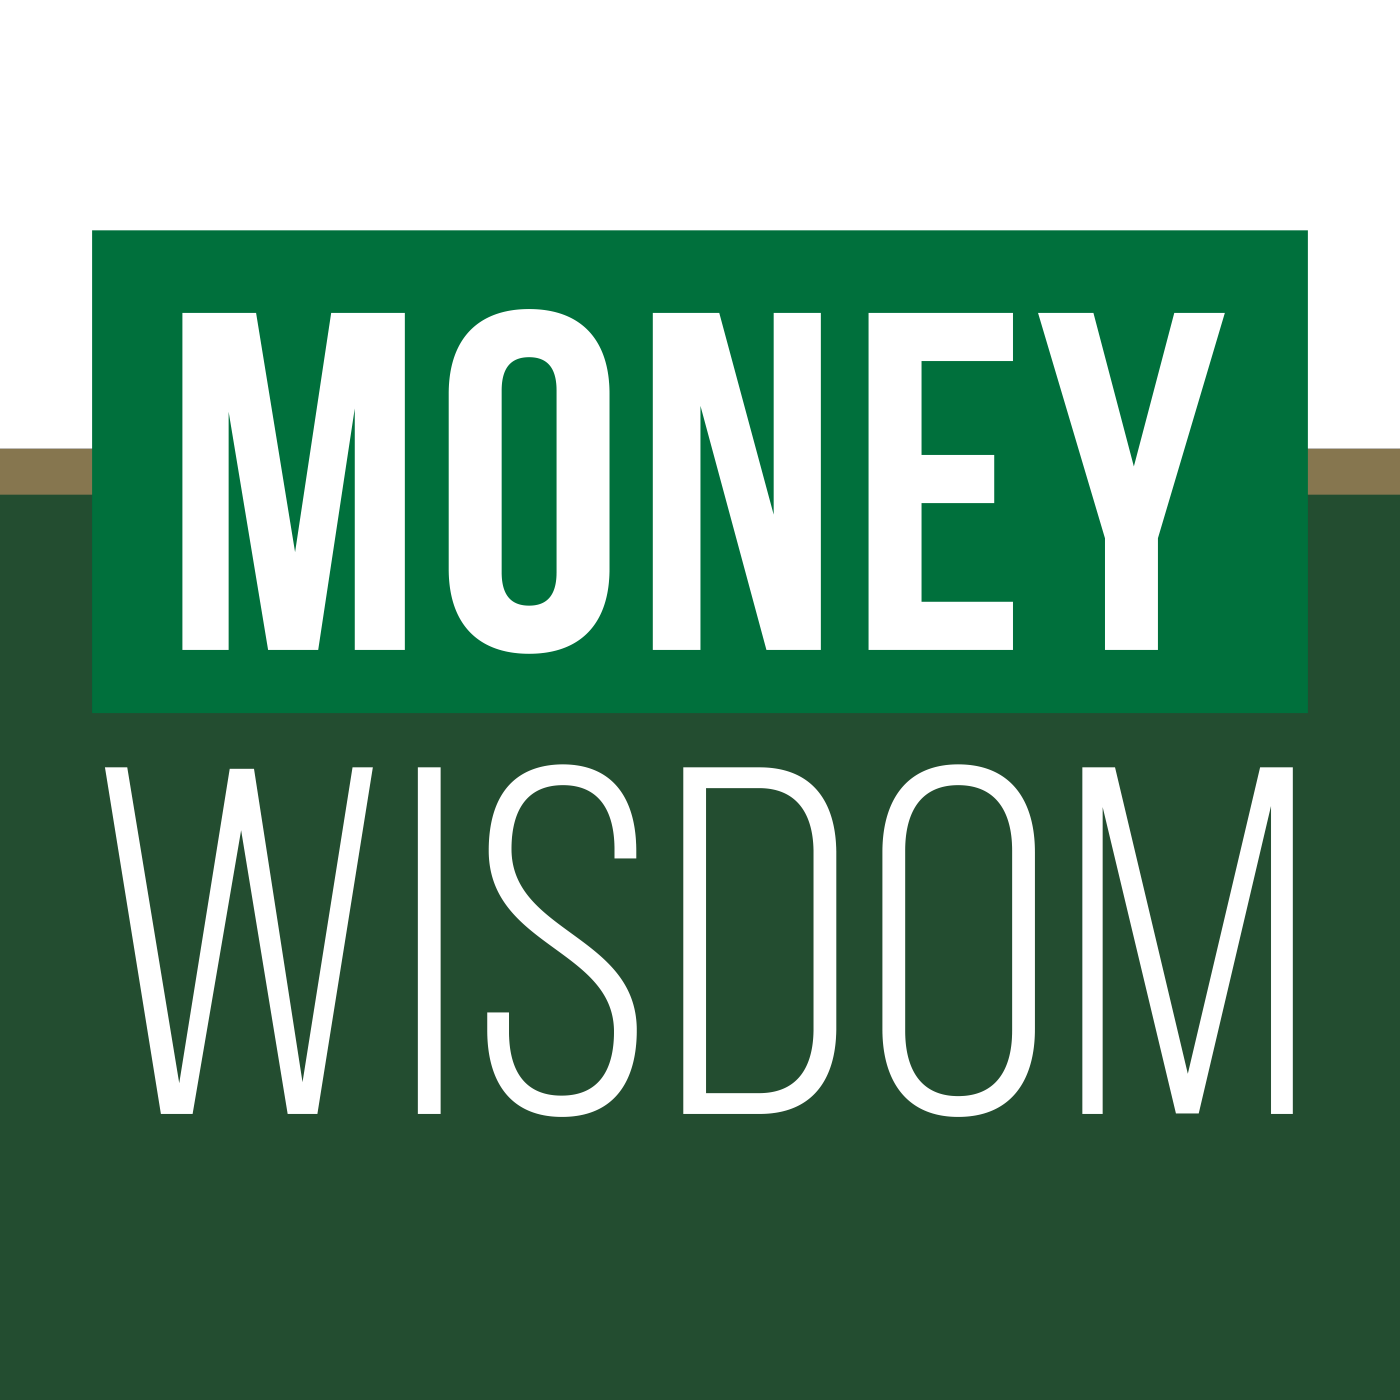 Johnson Brunetti Money Wisdom